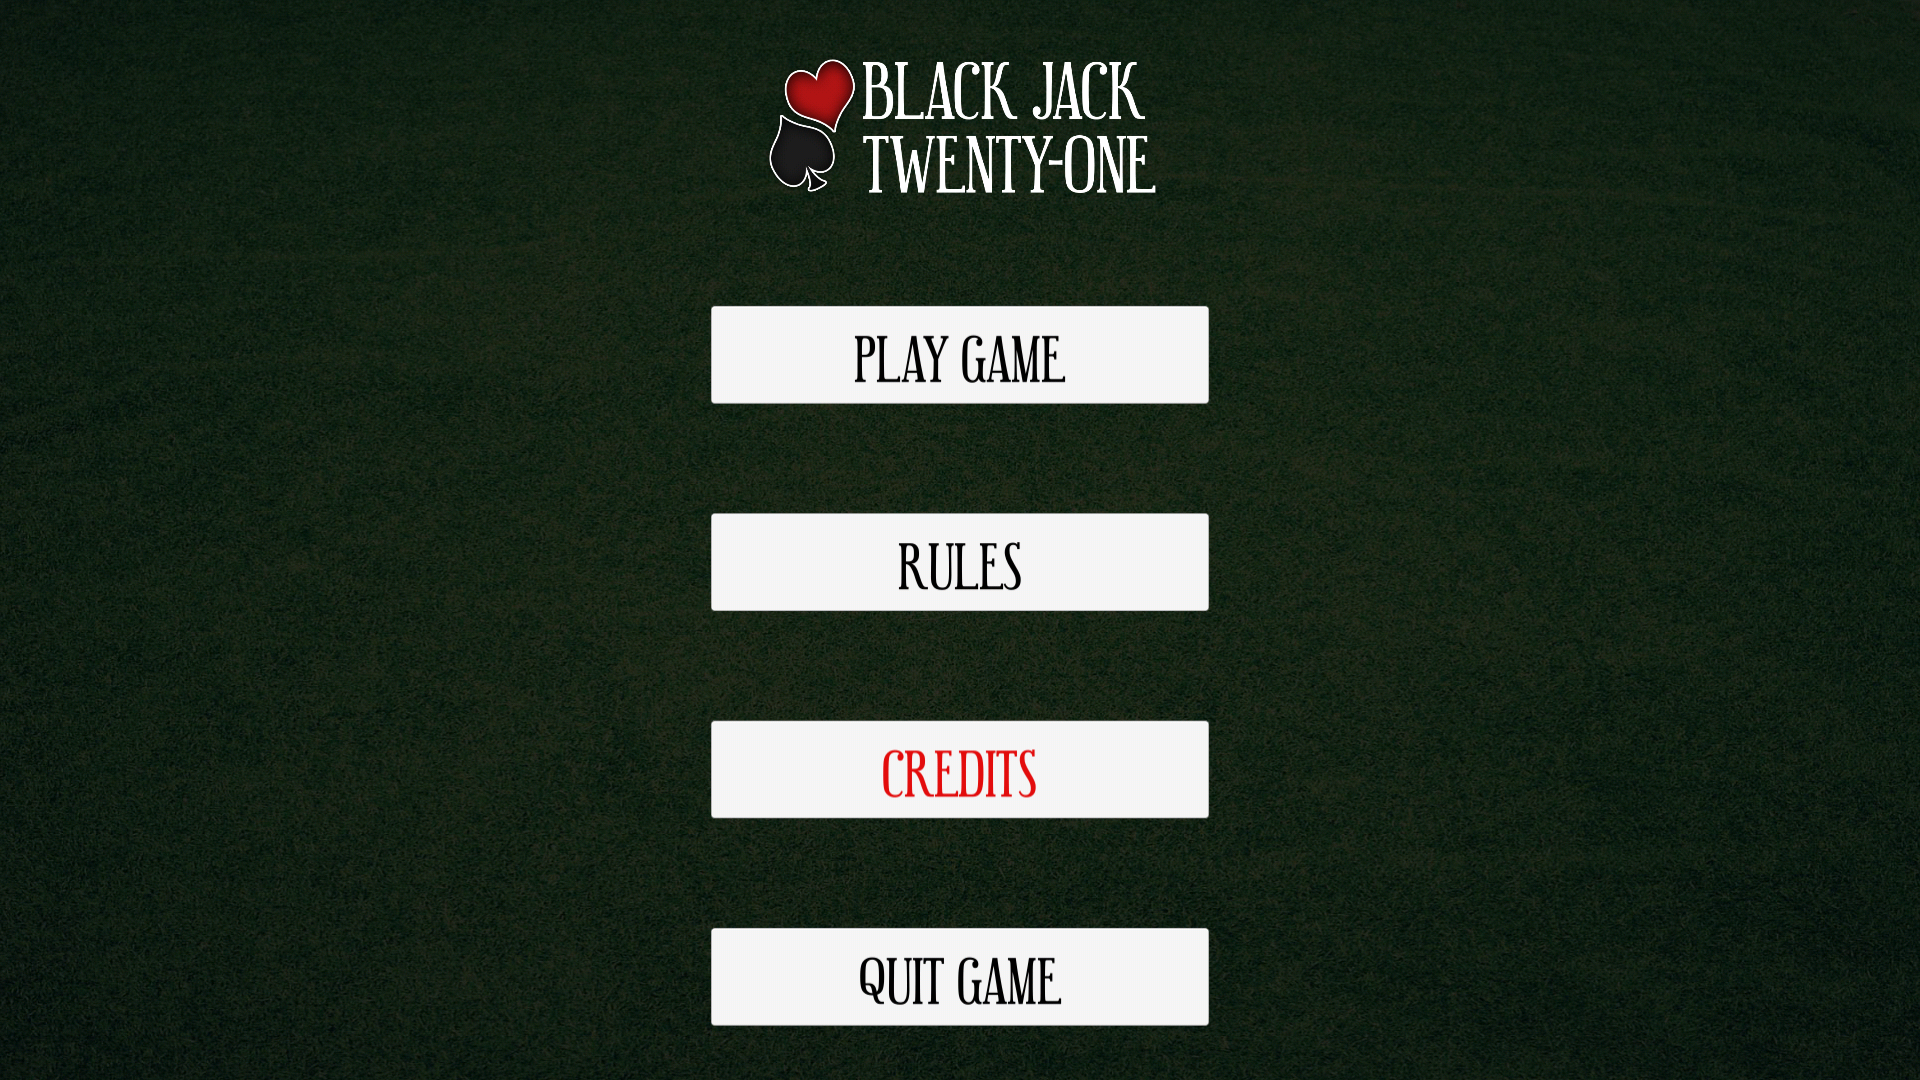 BlackJack Twenty-One